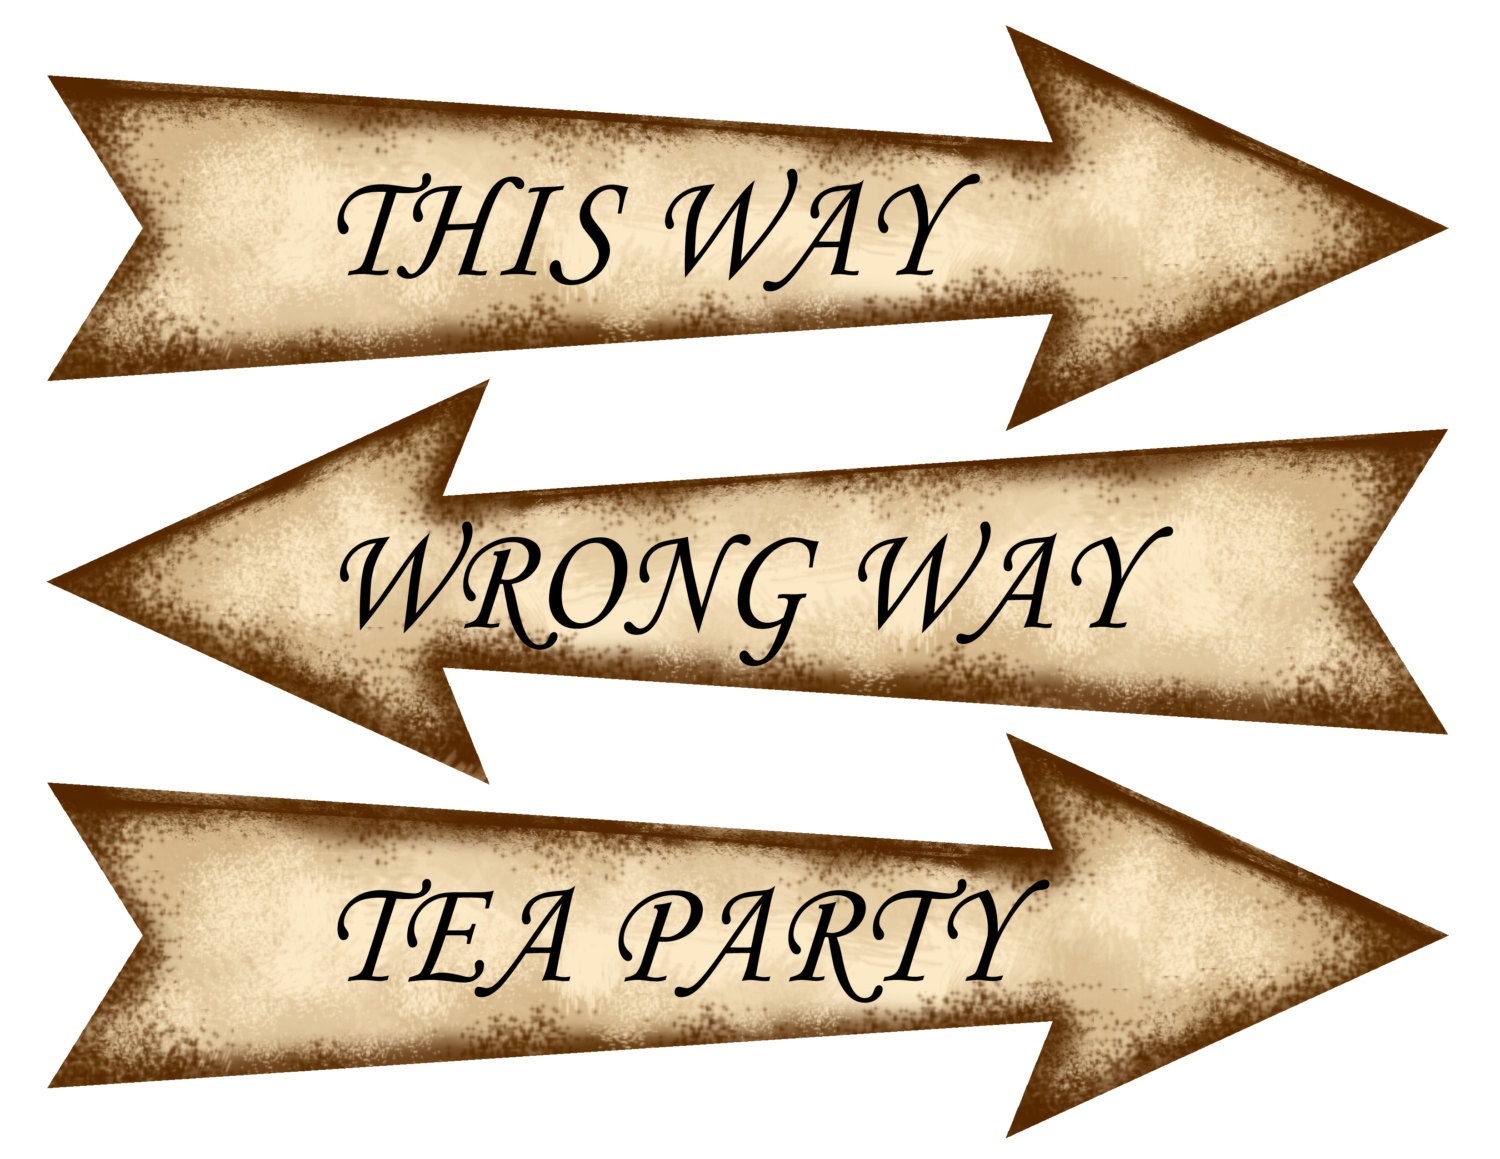 alice-in-wonderland-mad-hatter-tea-party-large-arrow-signs-etsy-alice-in-wonderland-signs